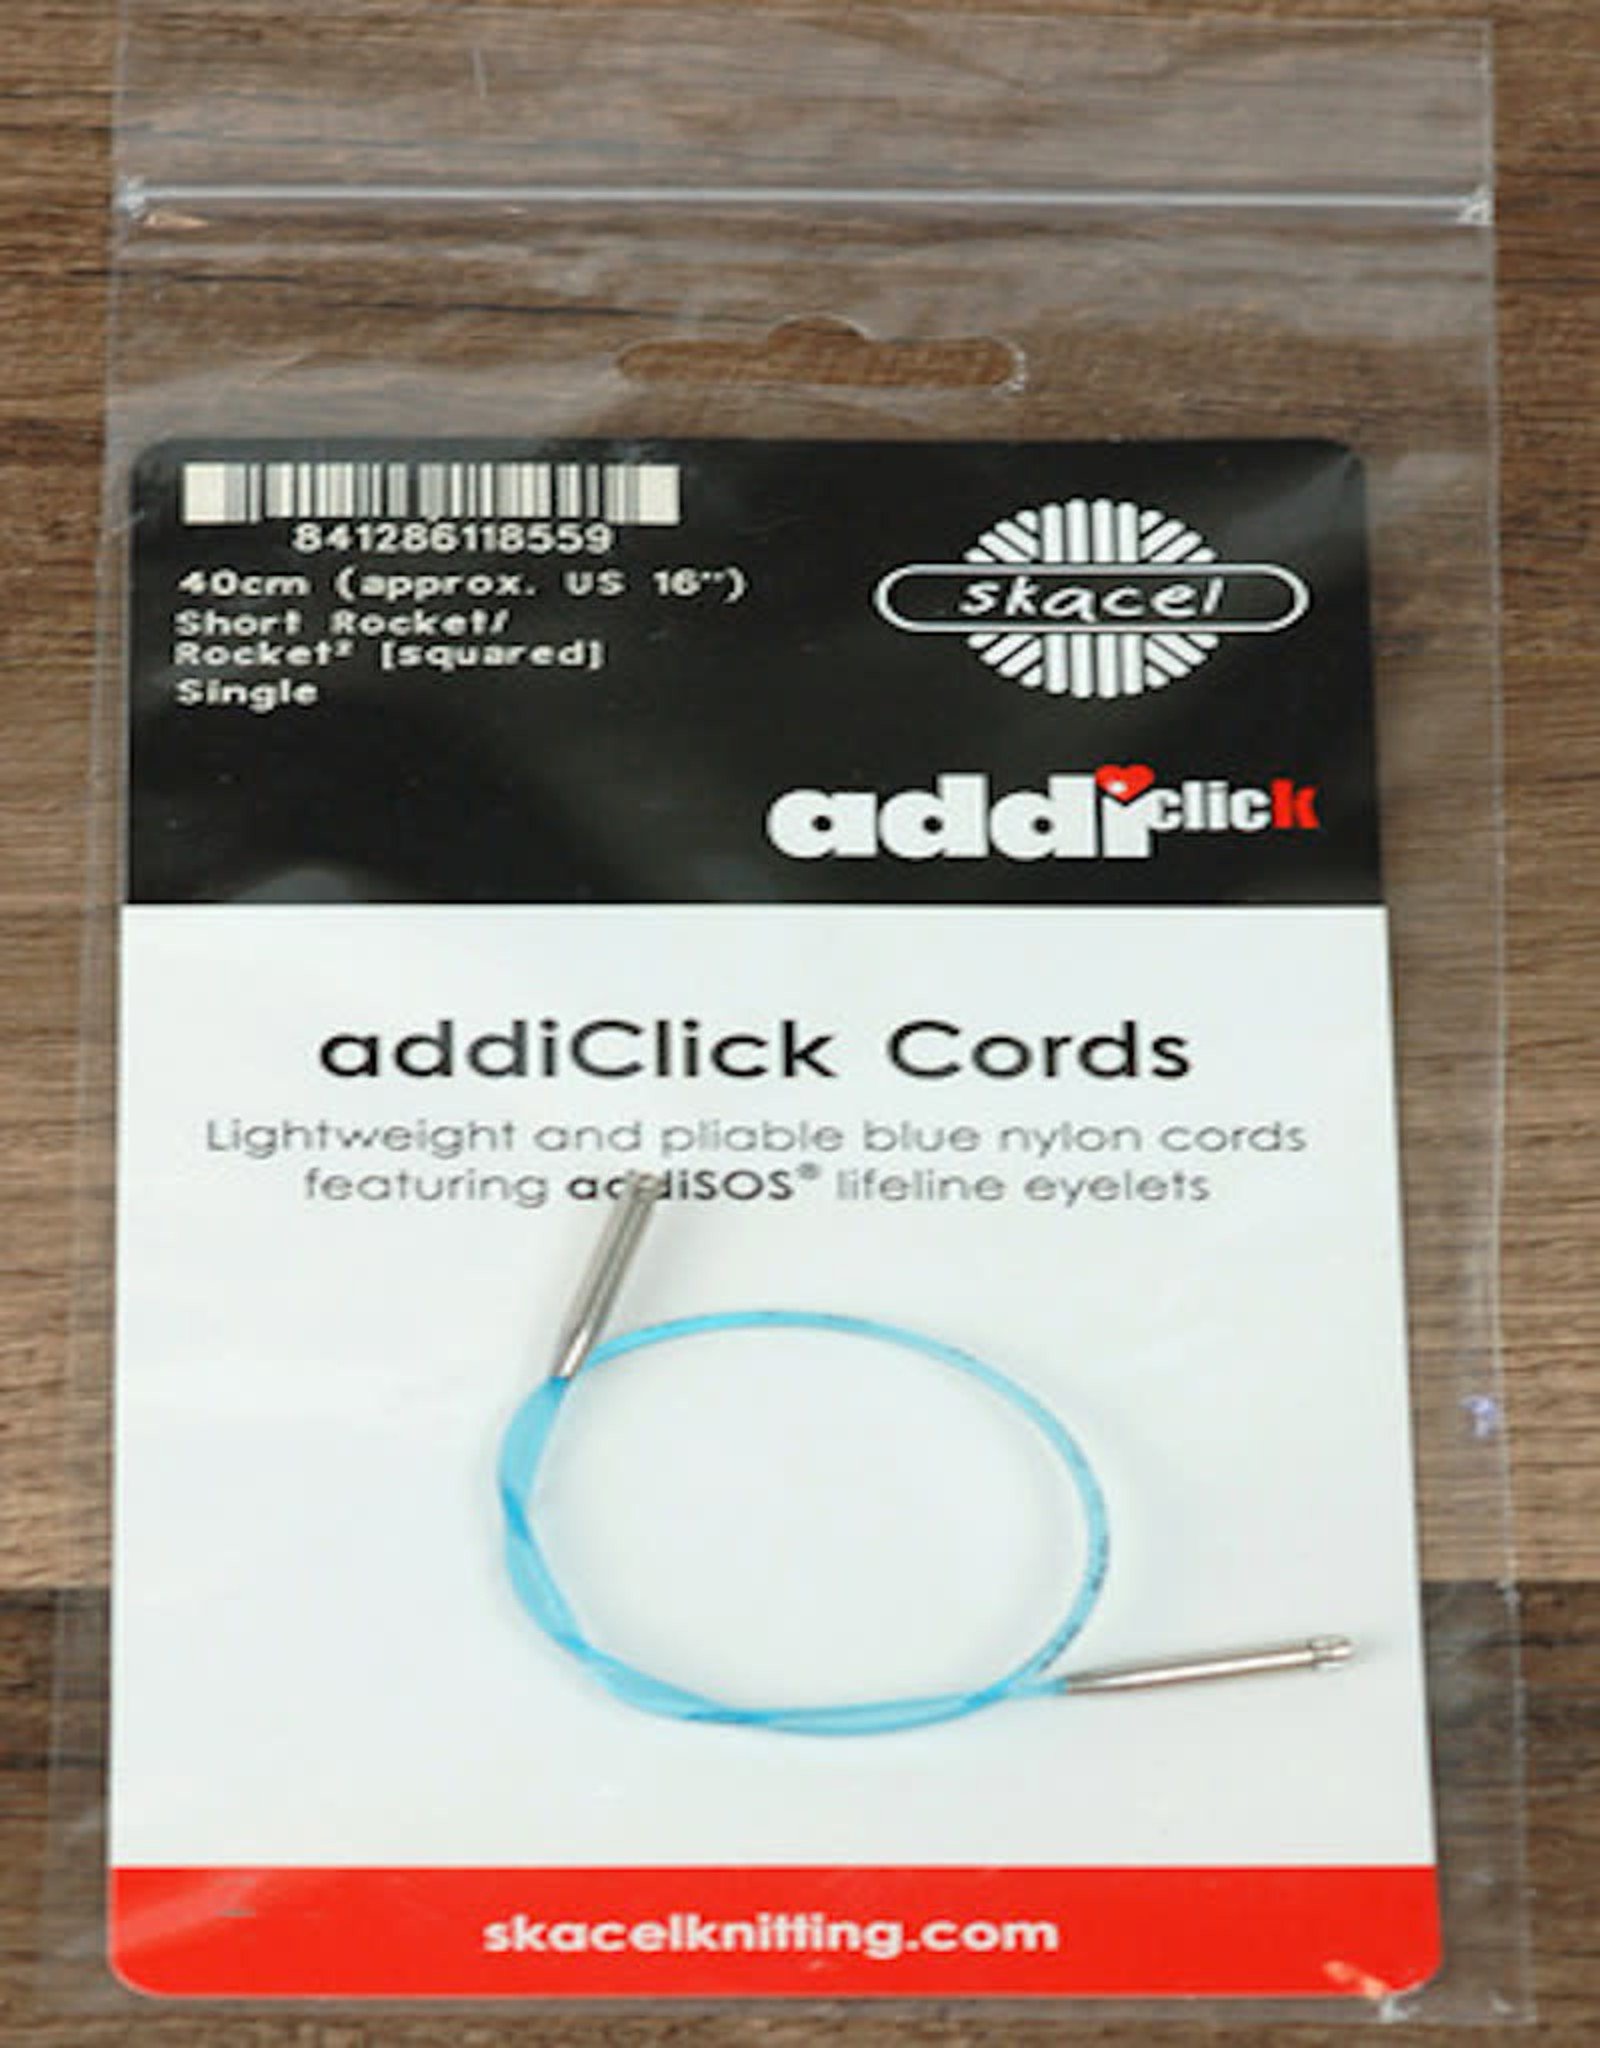 addi addiClick Cord -  Short Rocket / Rocket² [Squared]